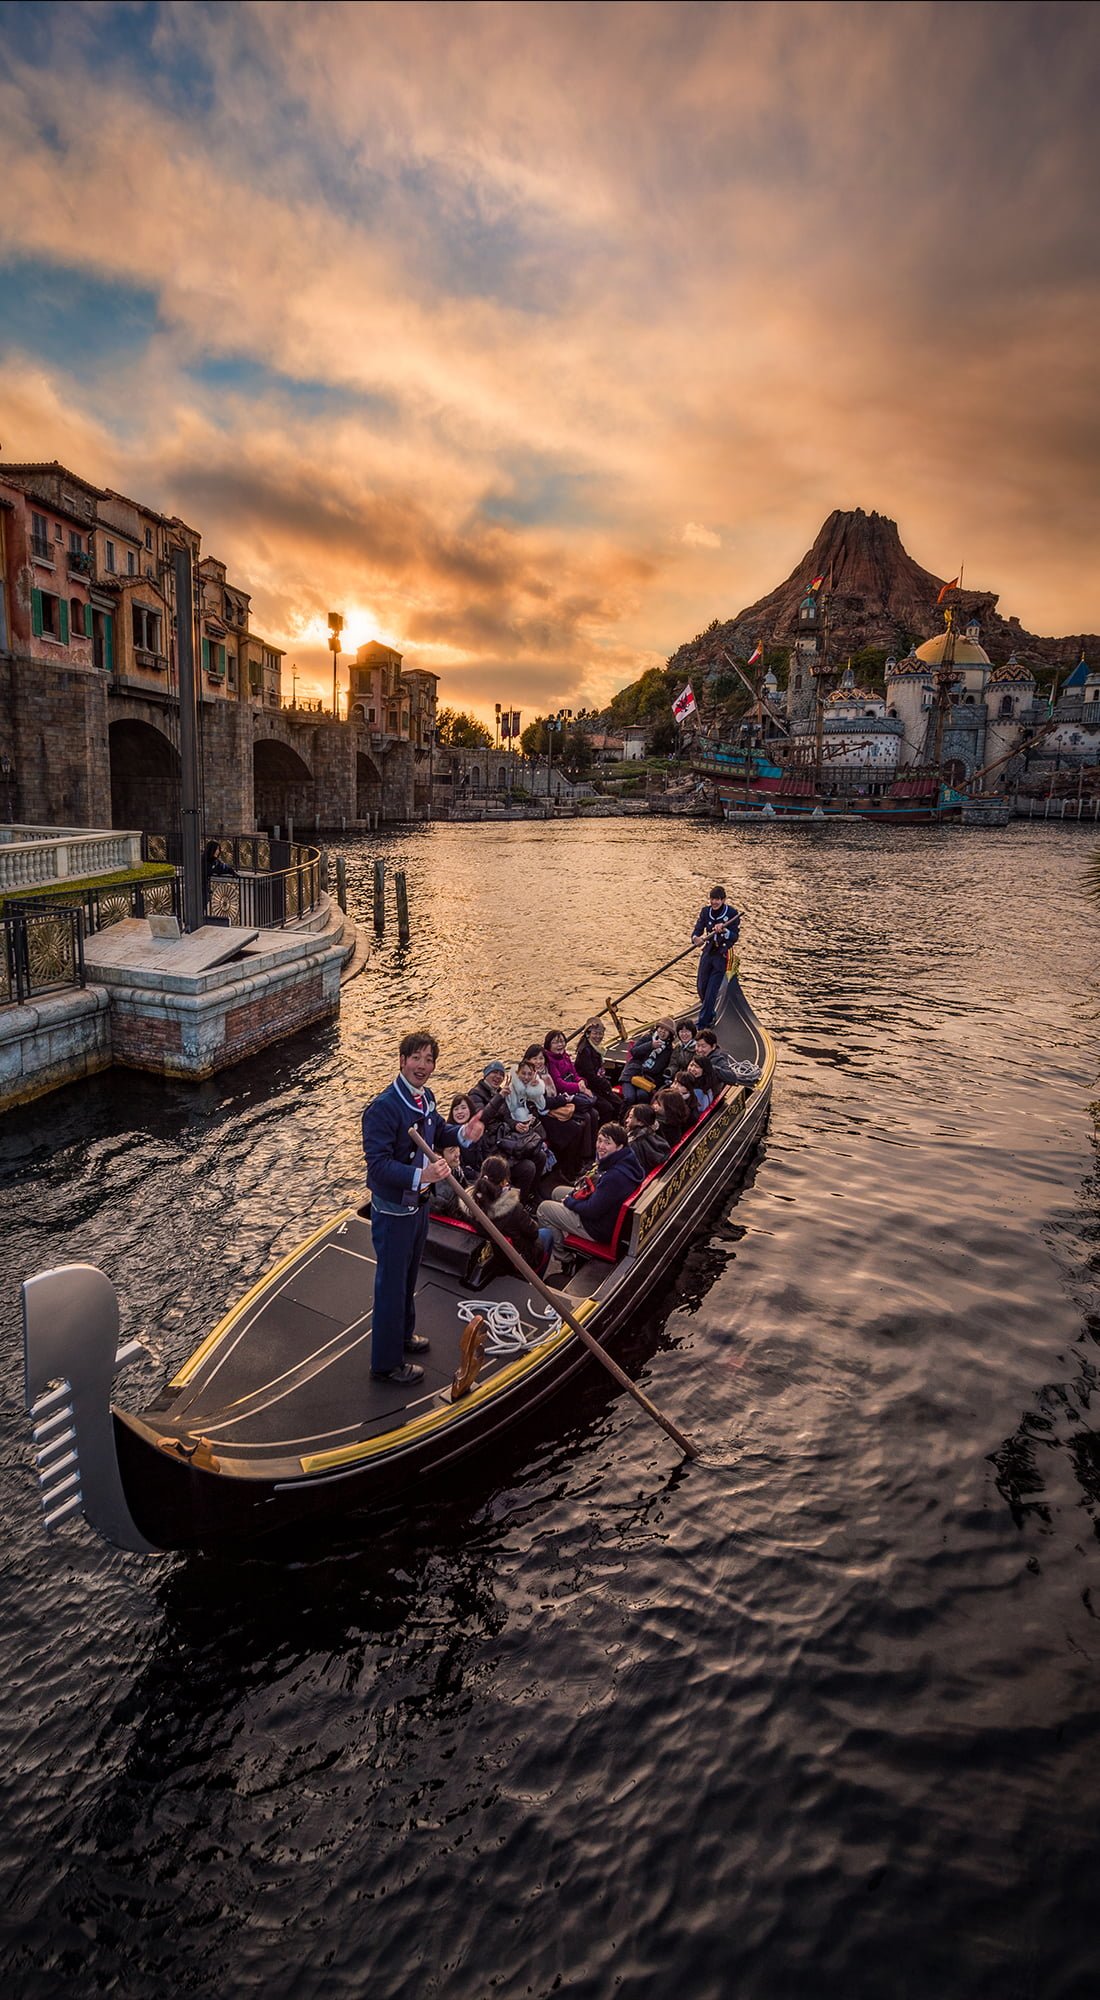 Best Tokyo DisneySea Attractions & Ride Guide - Disney Tourist Blog